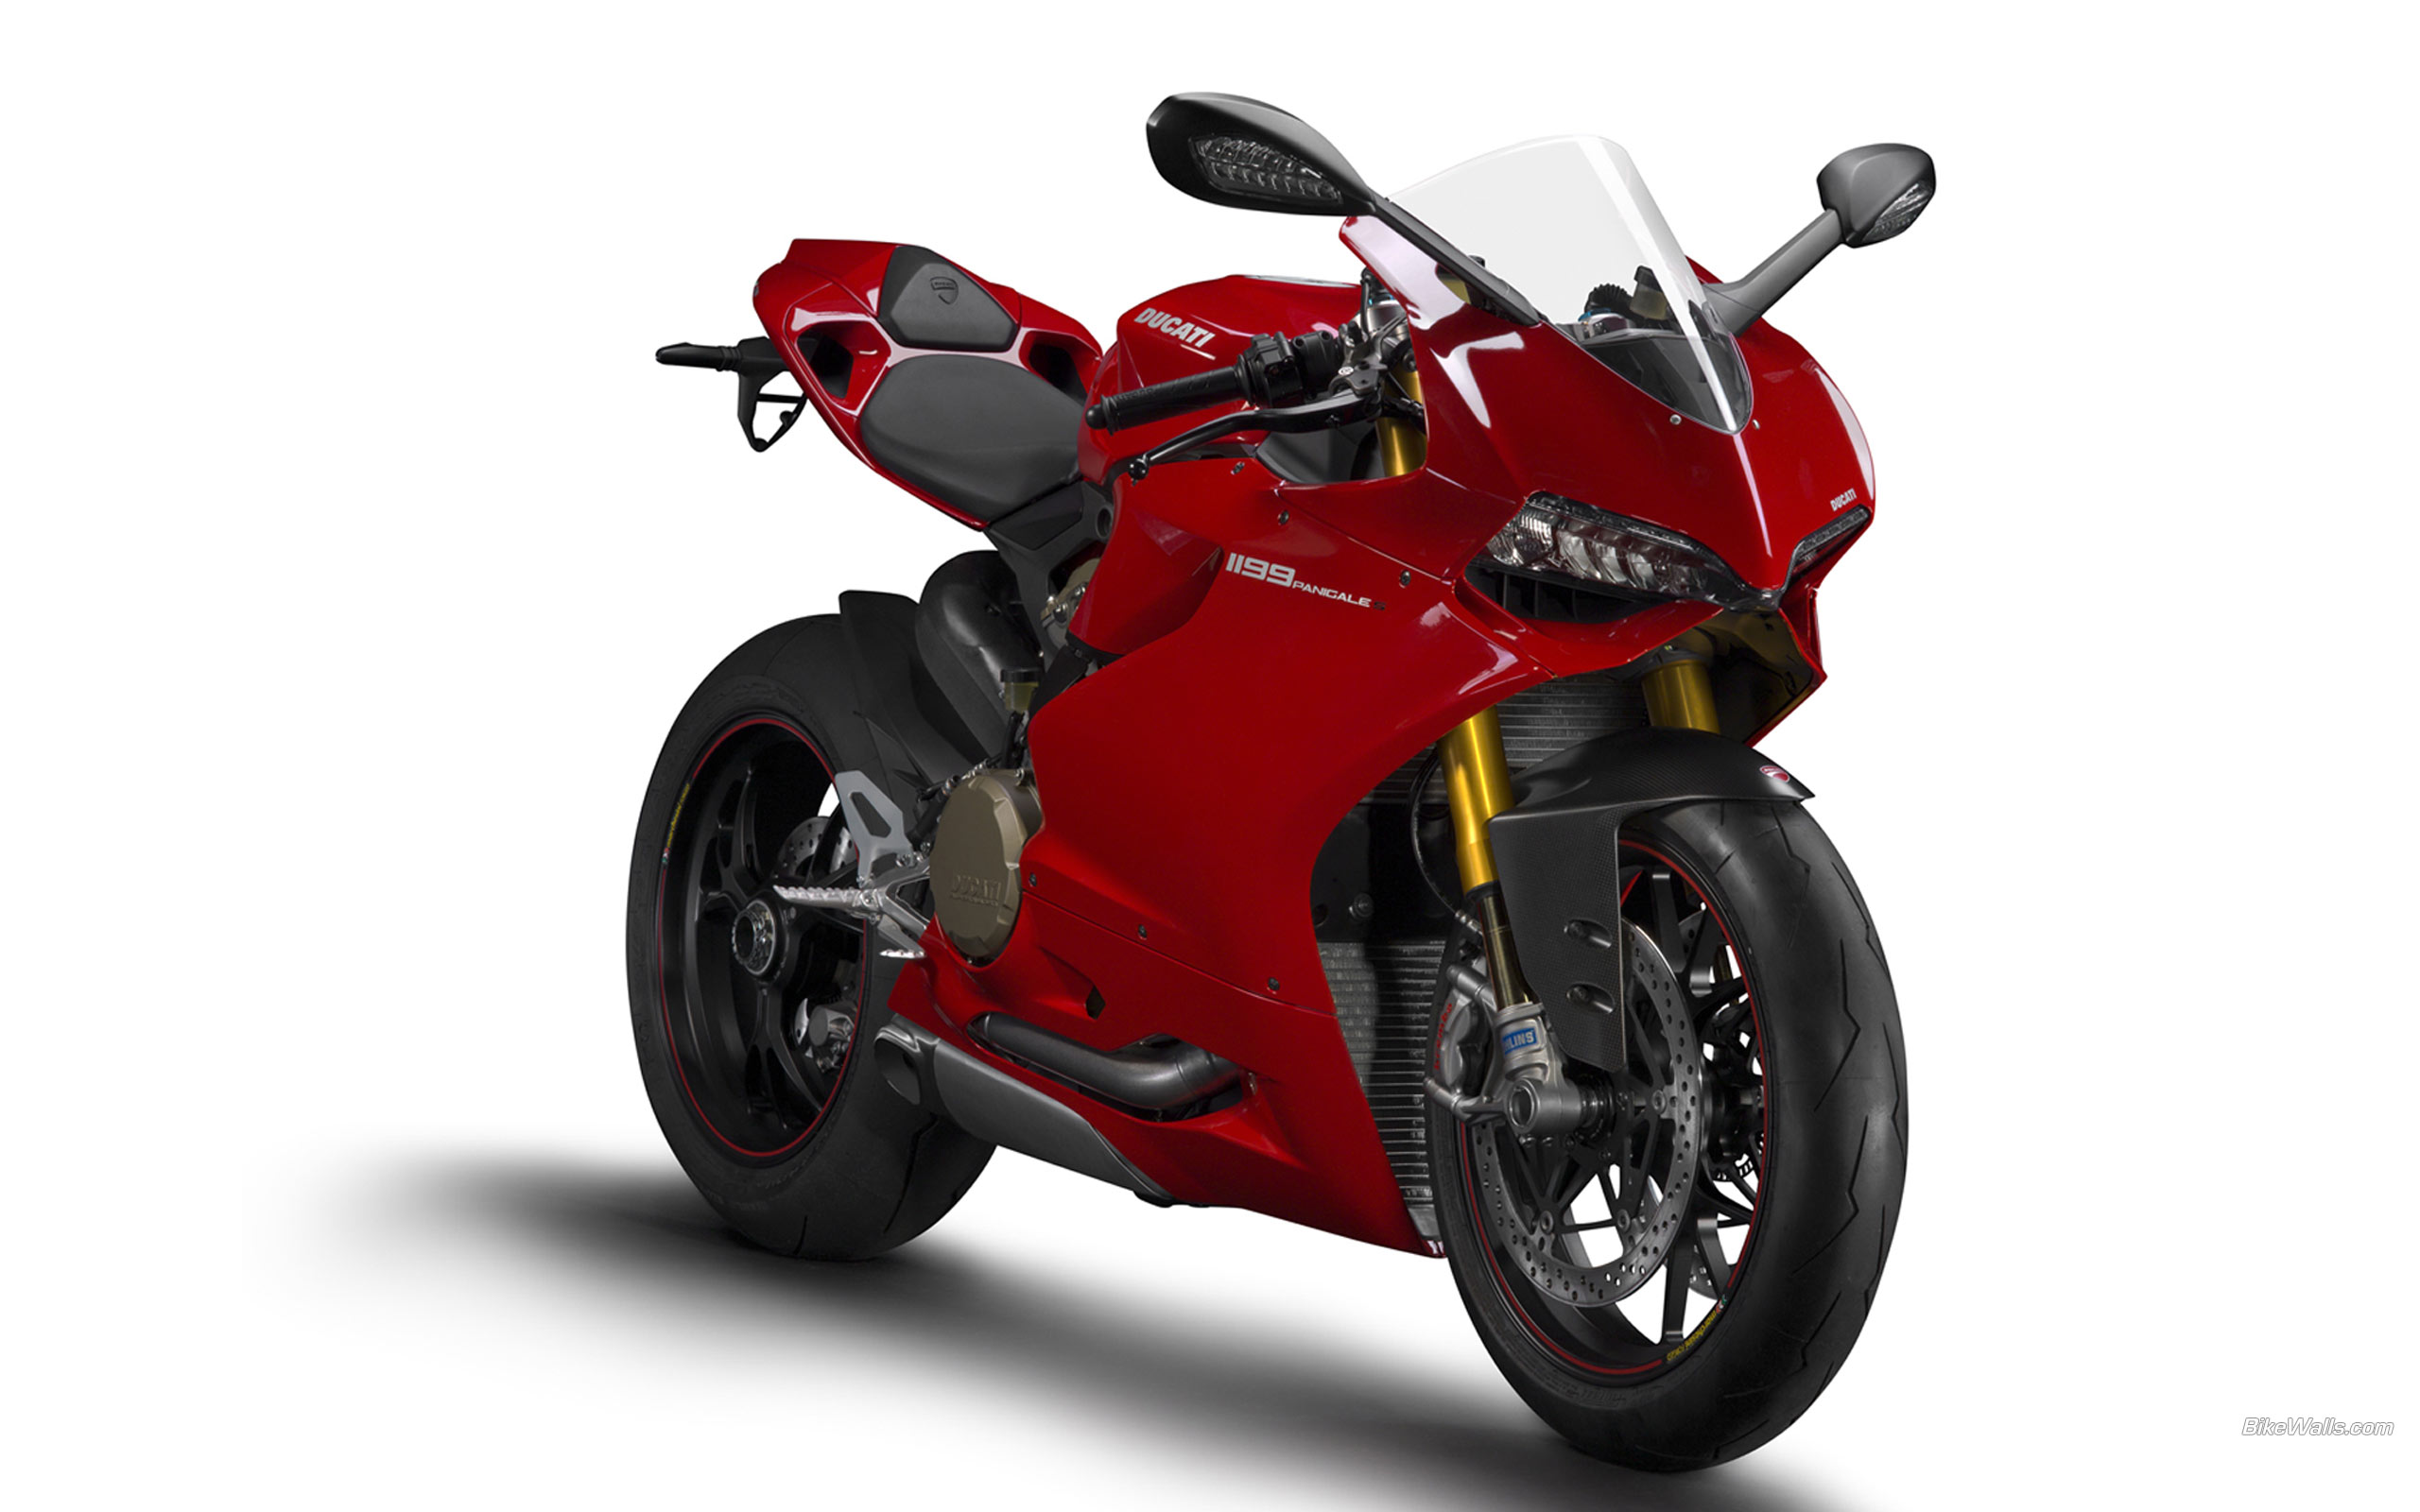 Ducati_1199_Pangale_S_2012_01_2560x1600.jpg